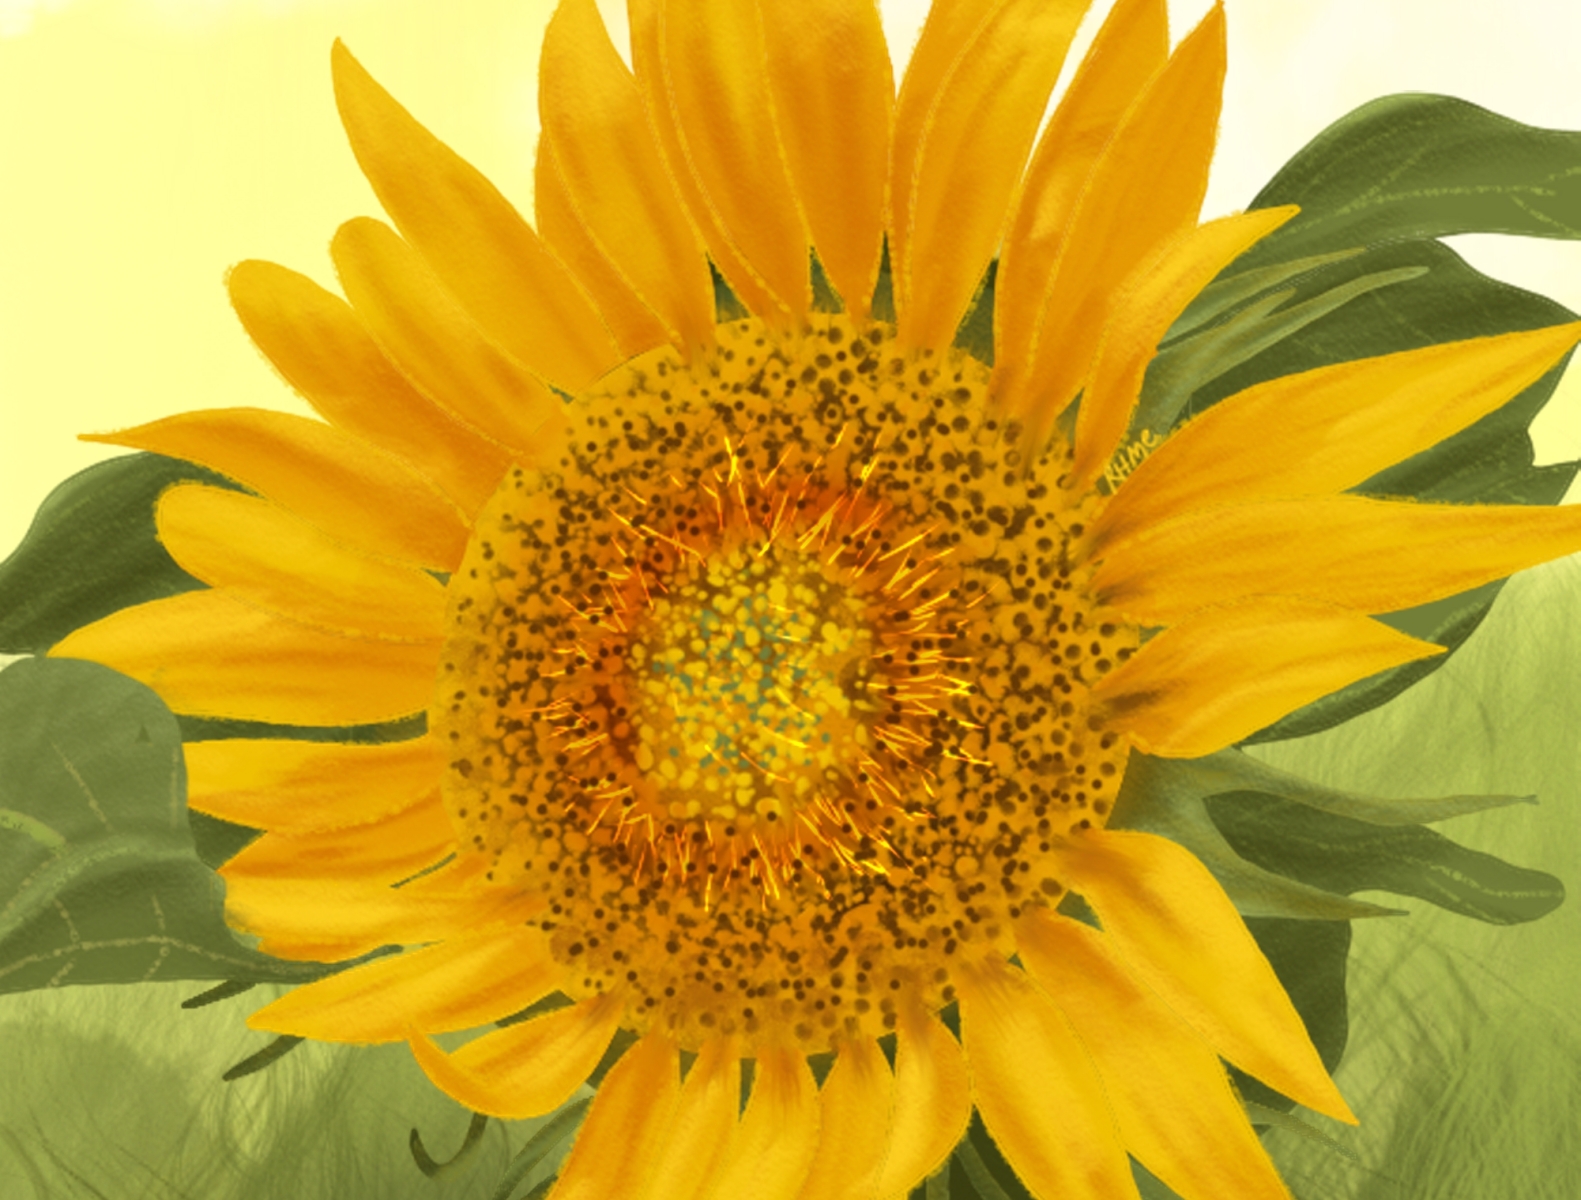 Sunflower By Erina Andriyani On Dribbble